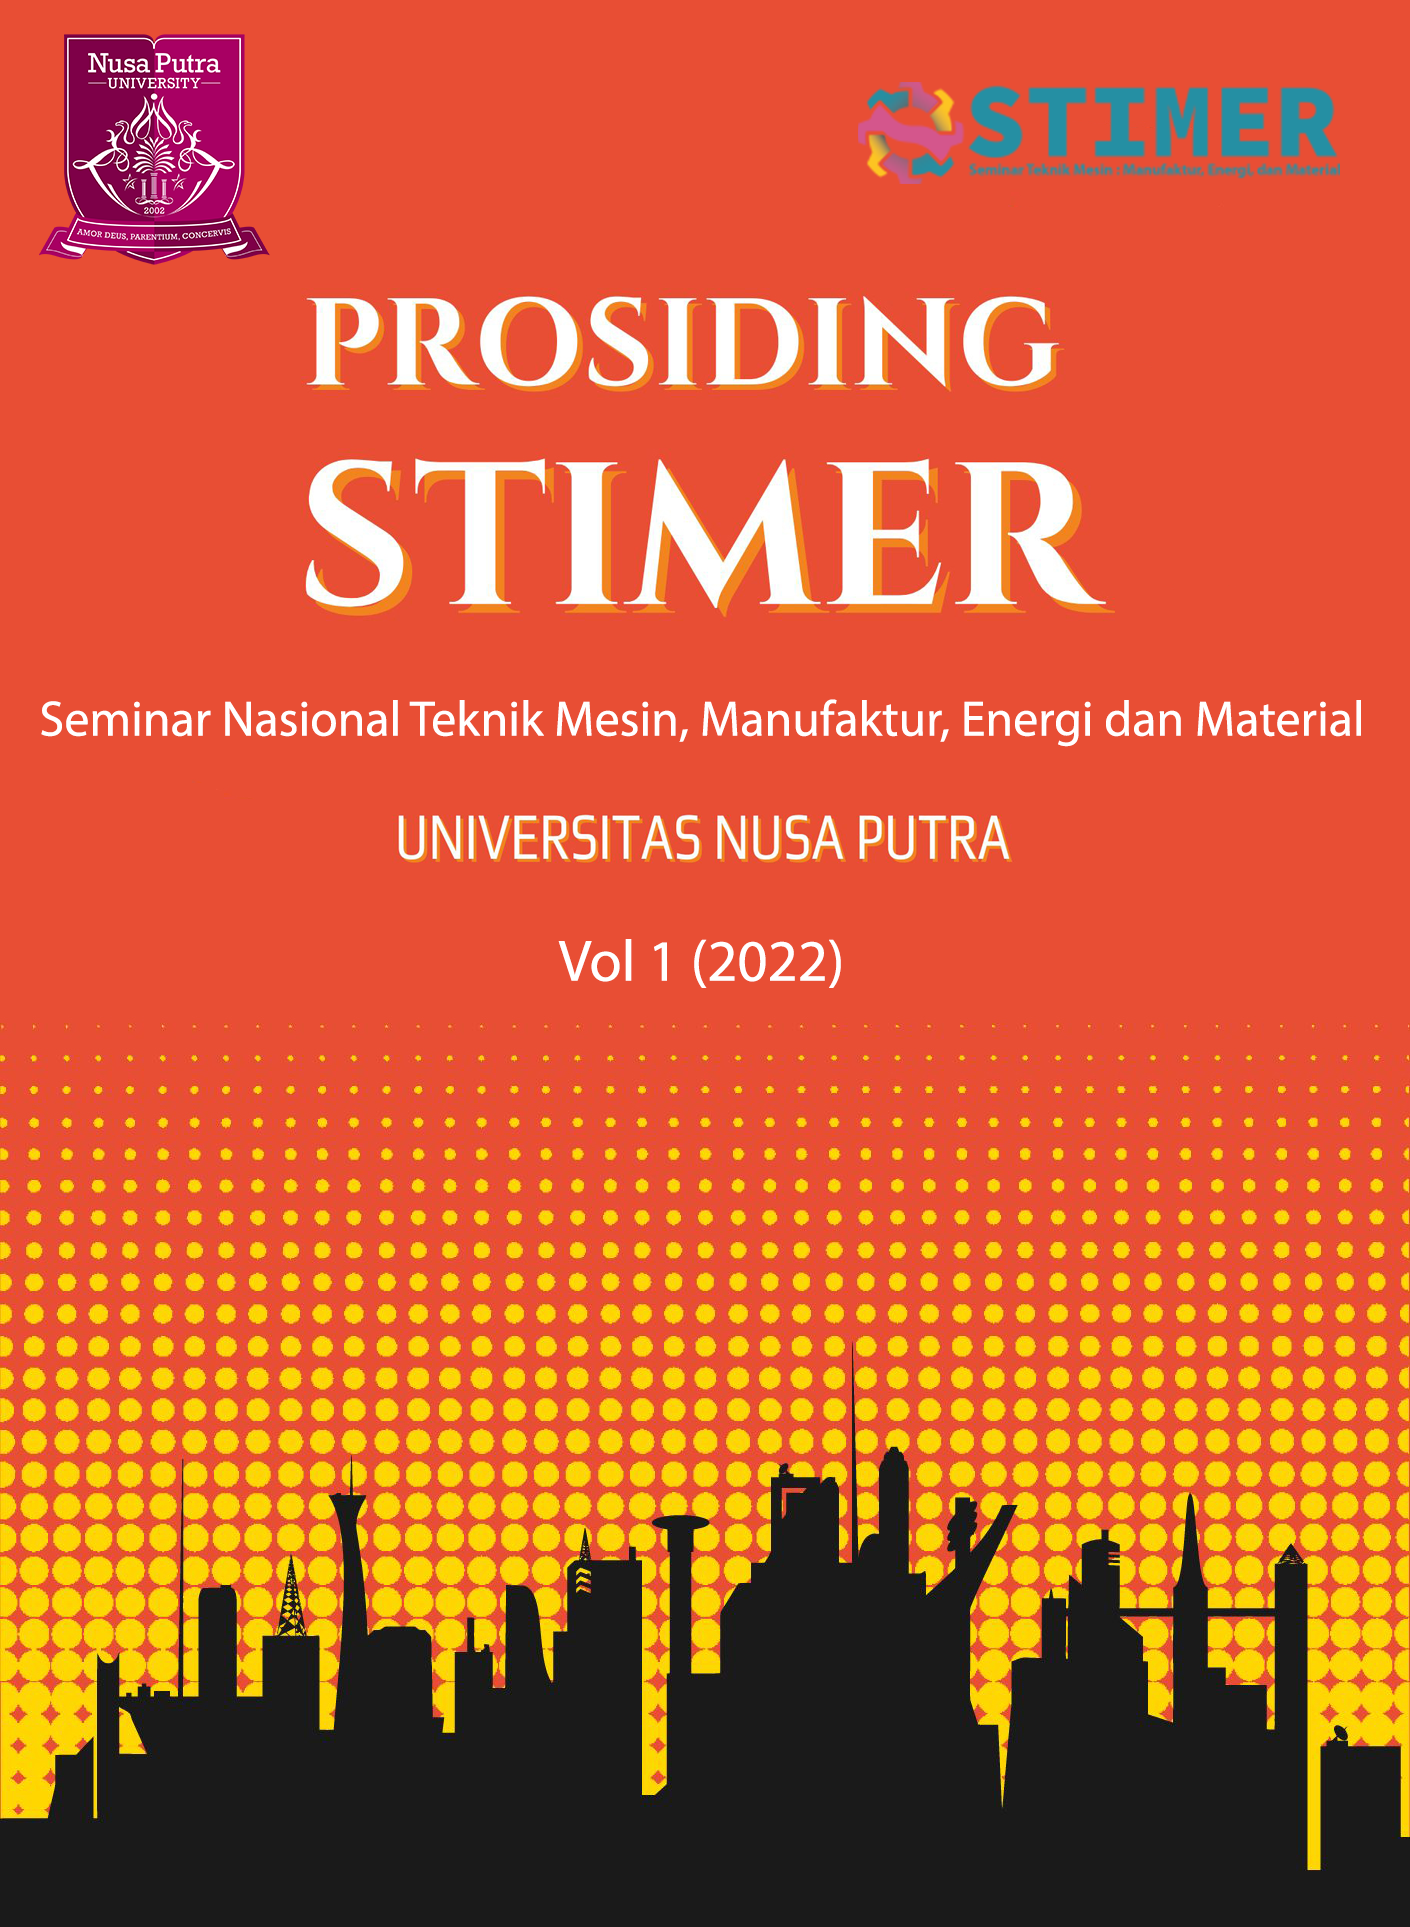 					View Vol. 1 (2022): Prosiding Stimer 2022
				